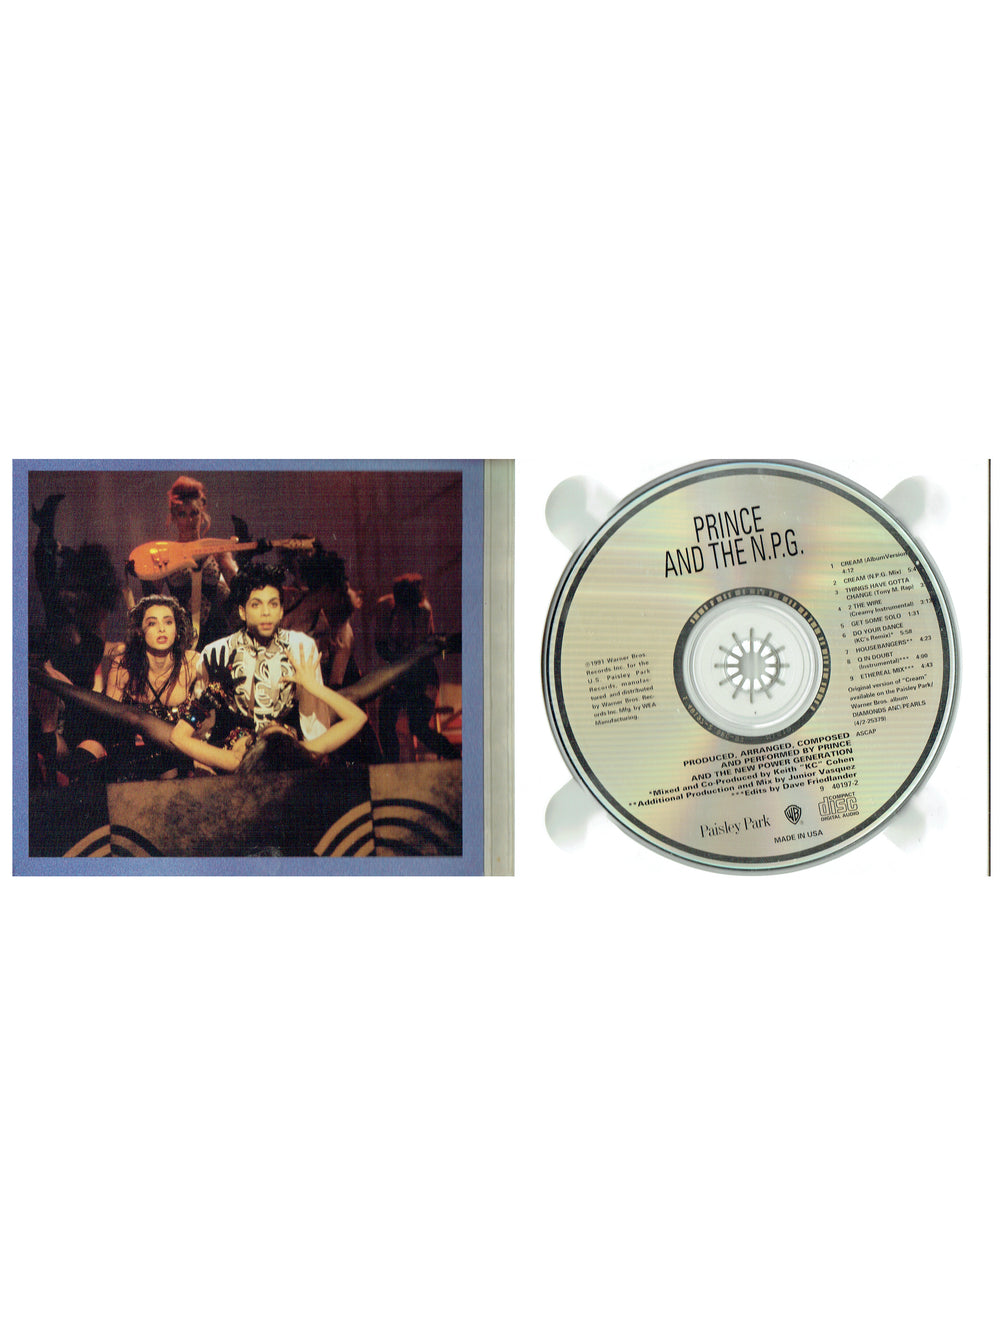 Prince – & The New Power Generation Cream CD Maxi-Single, Digipak US Preloved: 1991*